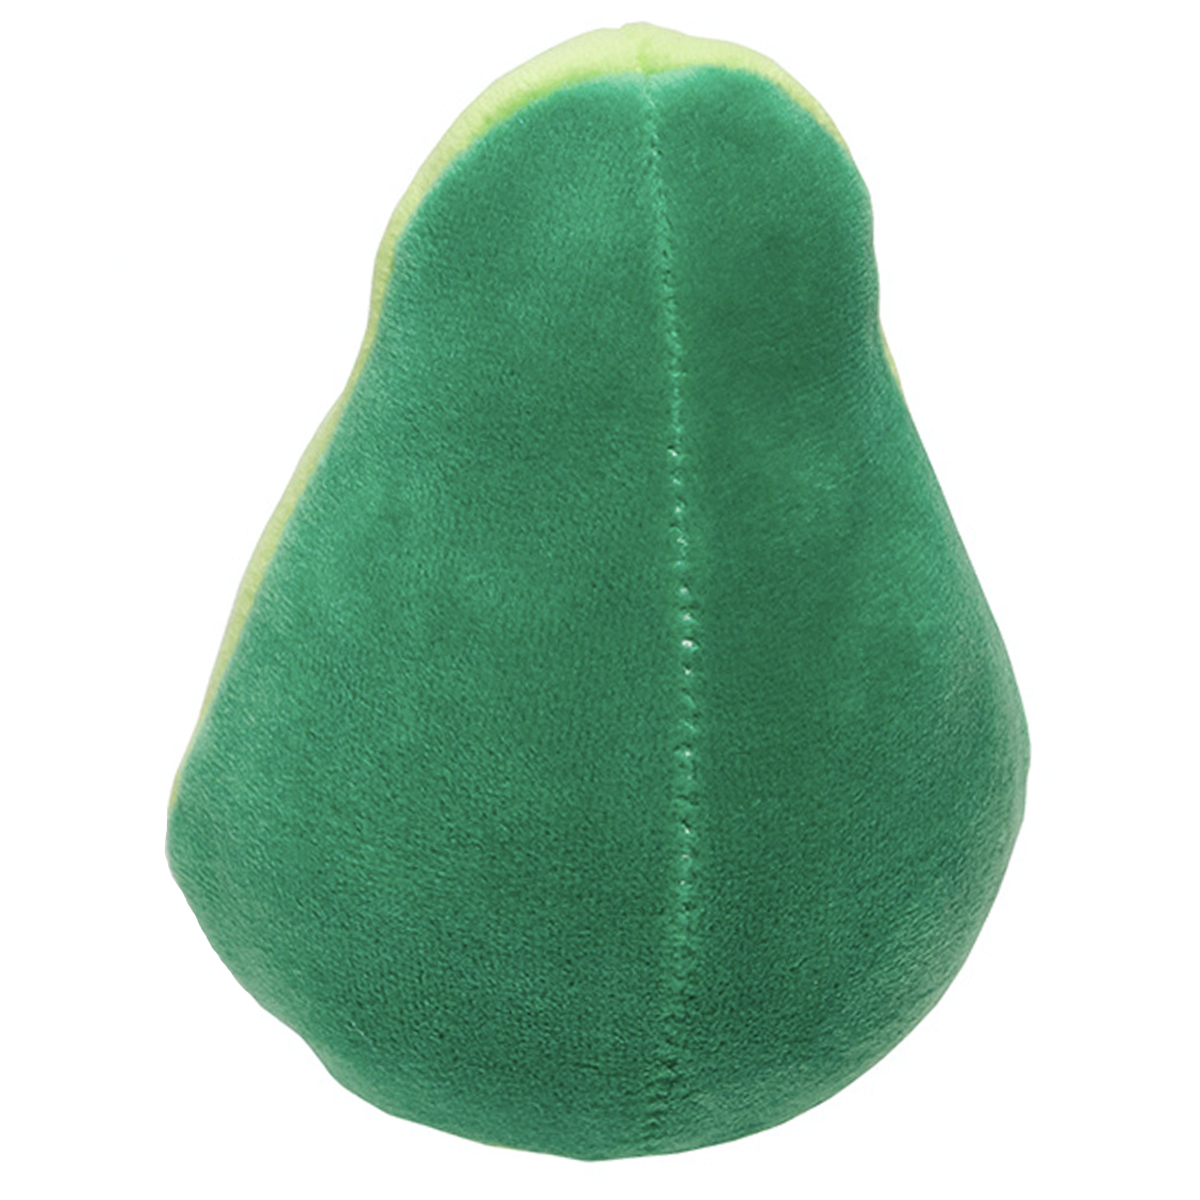 Green/Light Green Avocado Stress Buster™